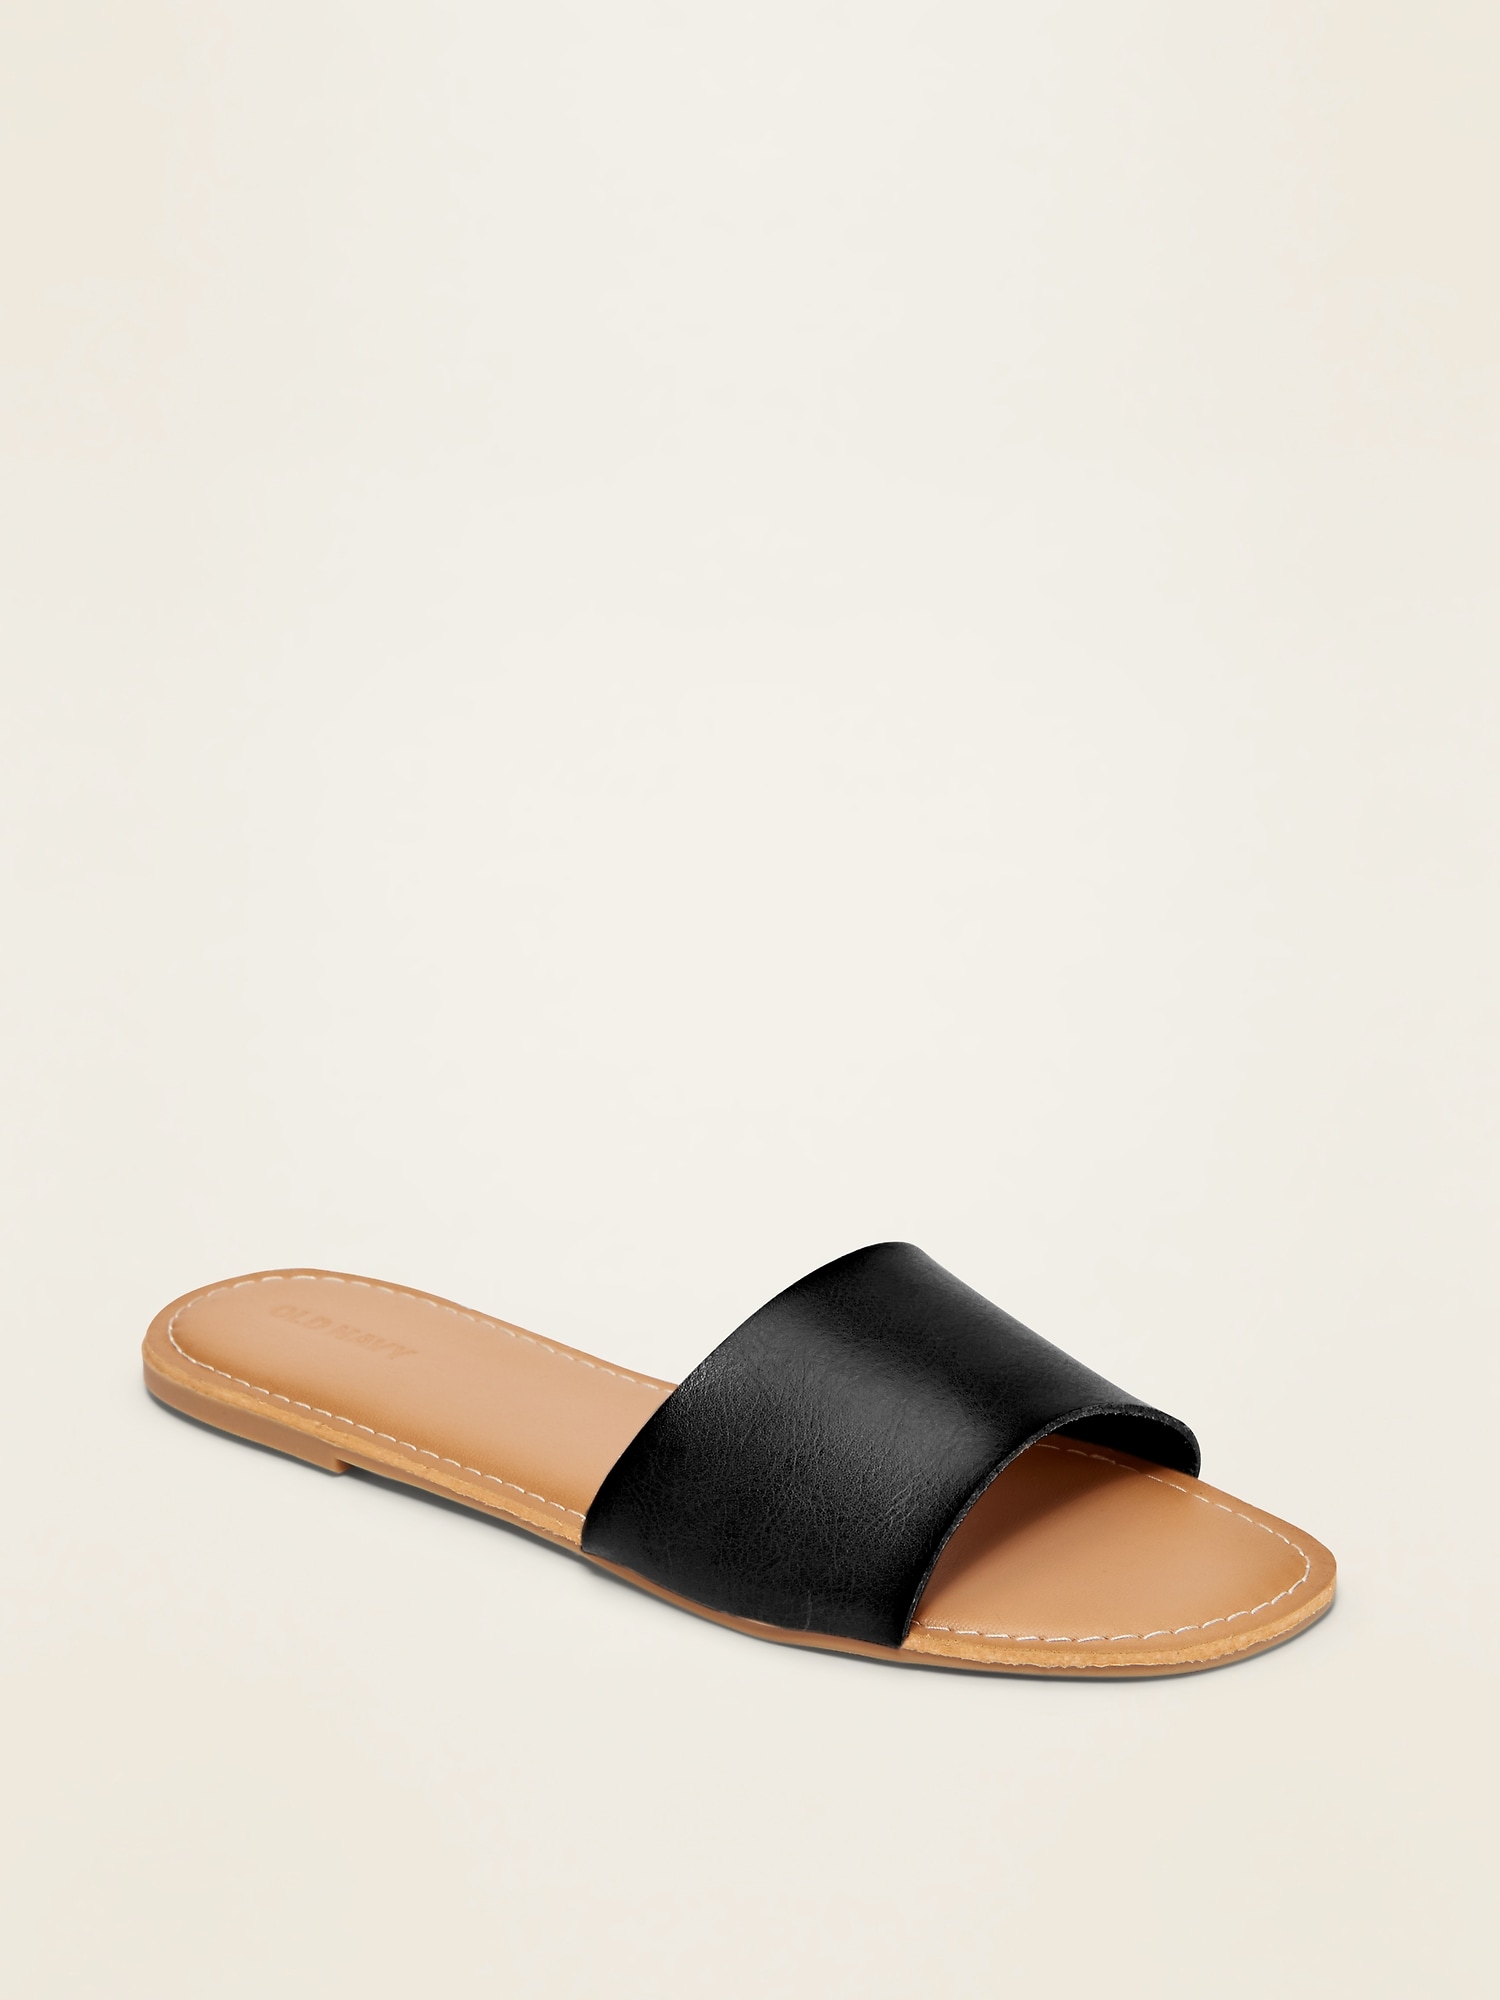 leather slip on sandal